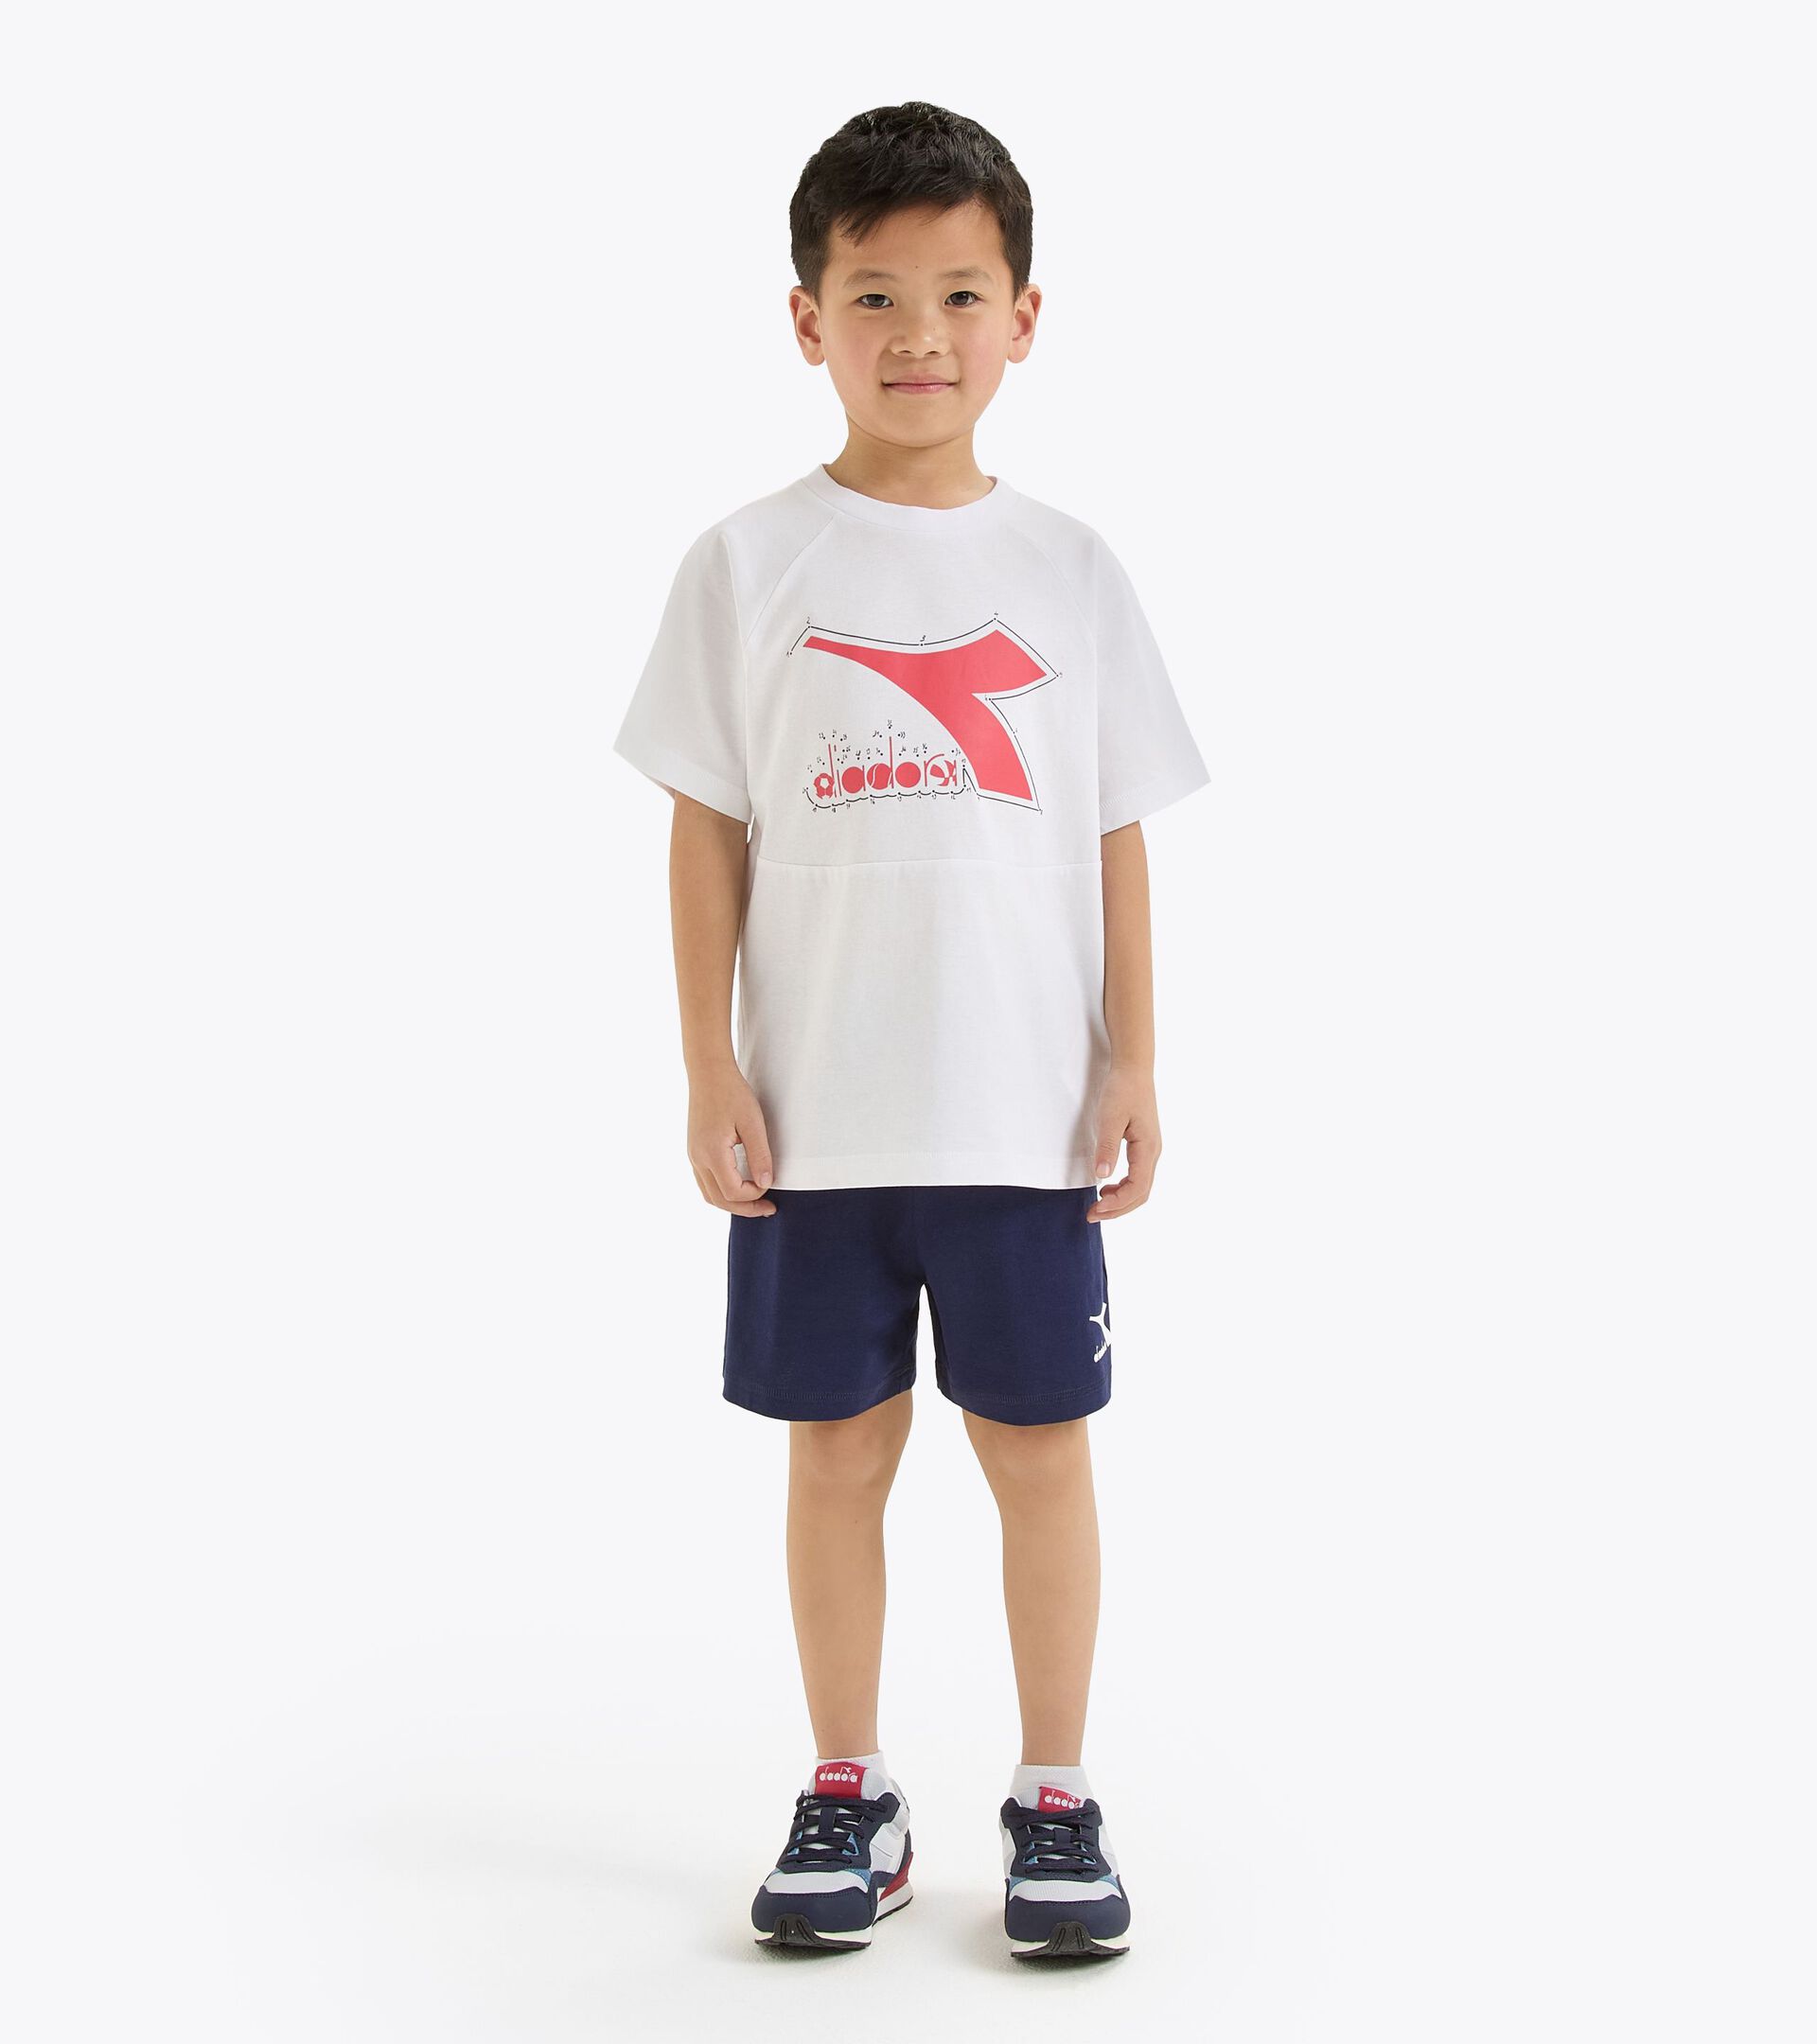 Sports set - T-shirt and shorts - Boy
 JB. SET SS RIDDLE OPTICAL WHITE - Diadora